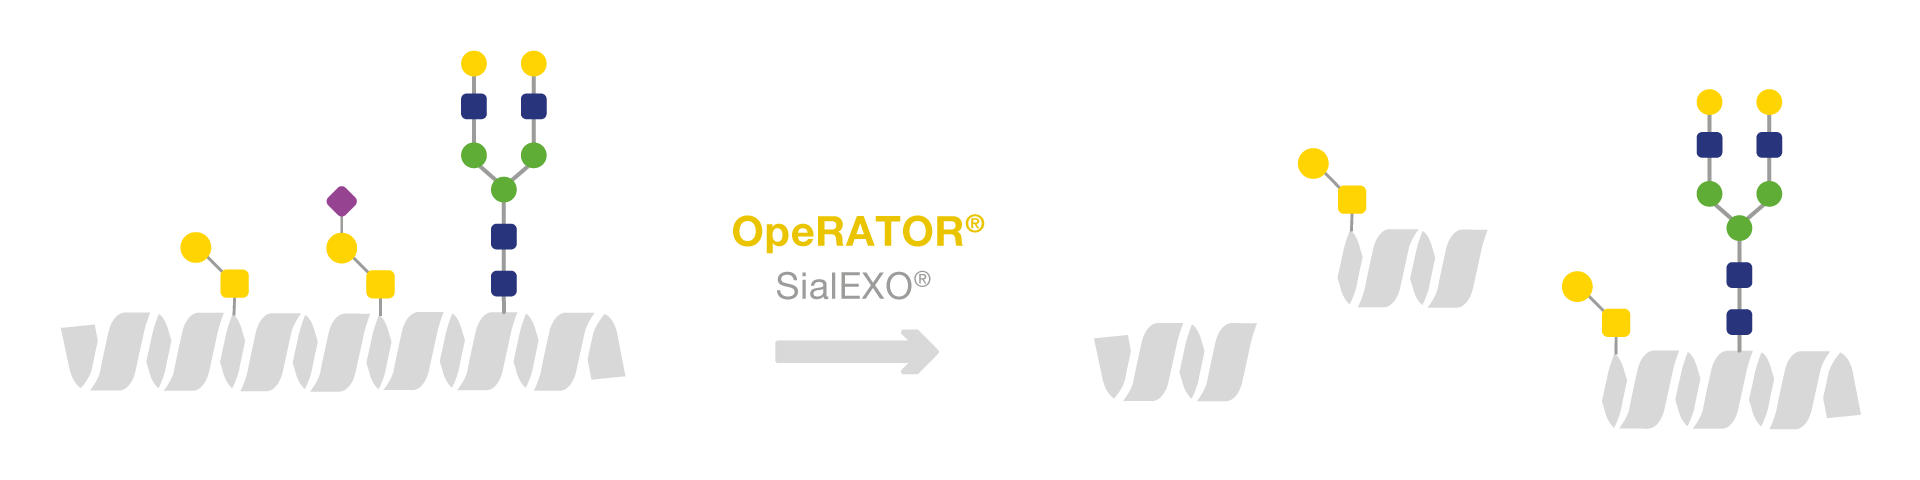 OpeRATOR workflow